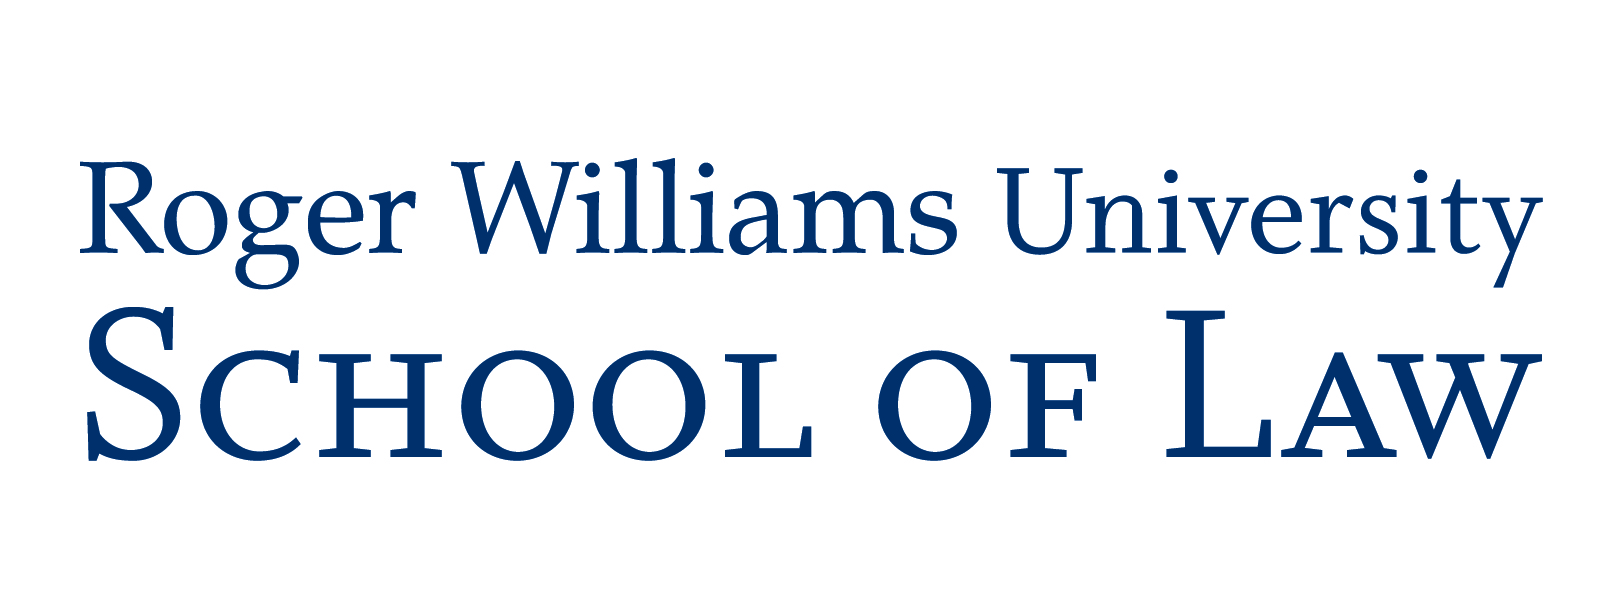 StageClip "Roger Williams University School of Law"